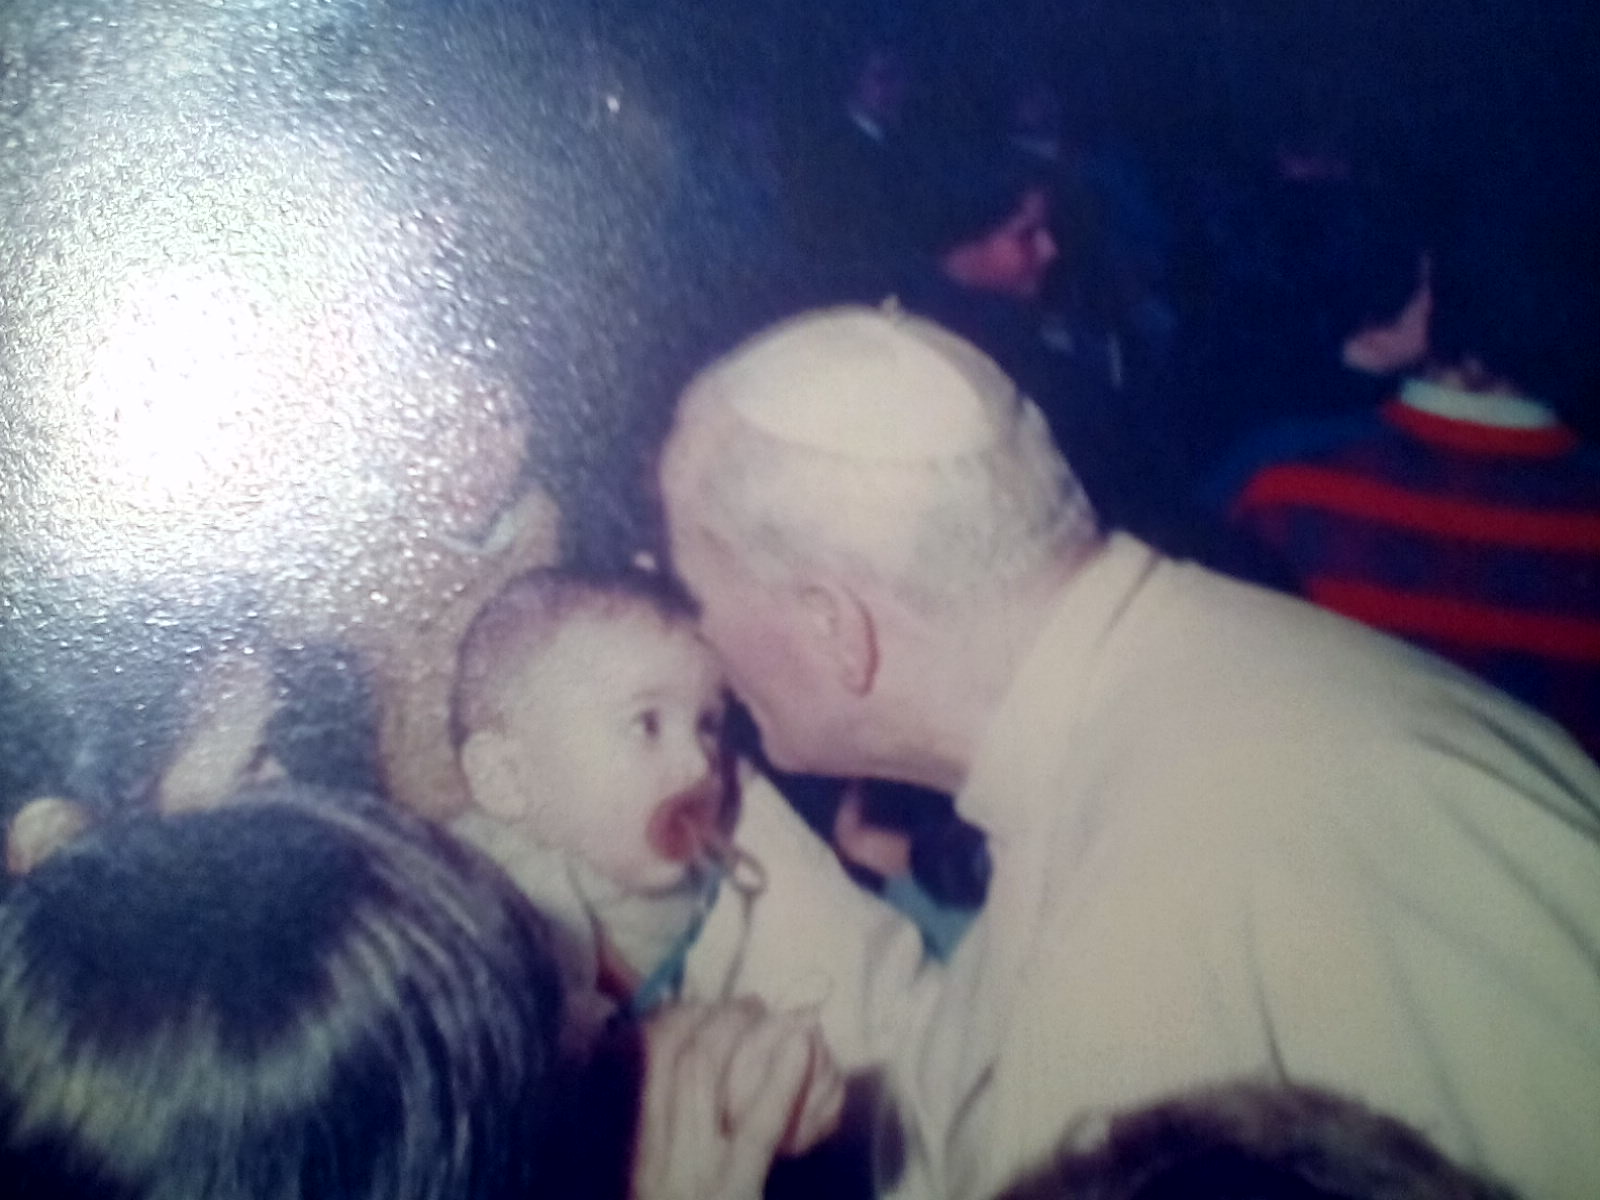 [1985] CIROTHEMUGIWARA KISS FROM POPE GIOVANNI PAOLO II